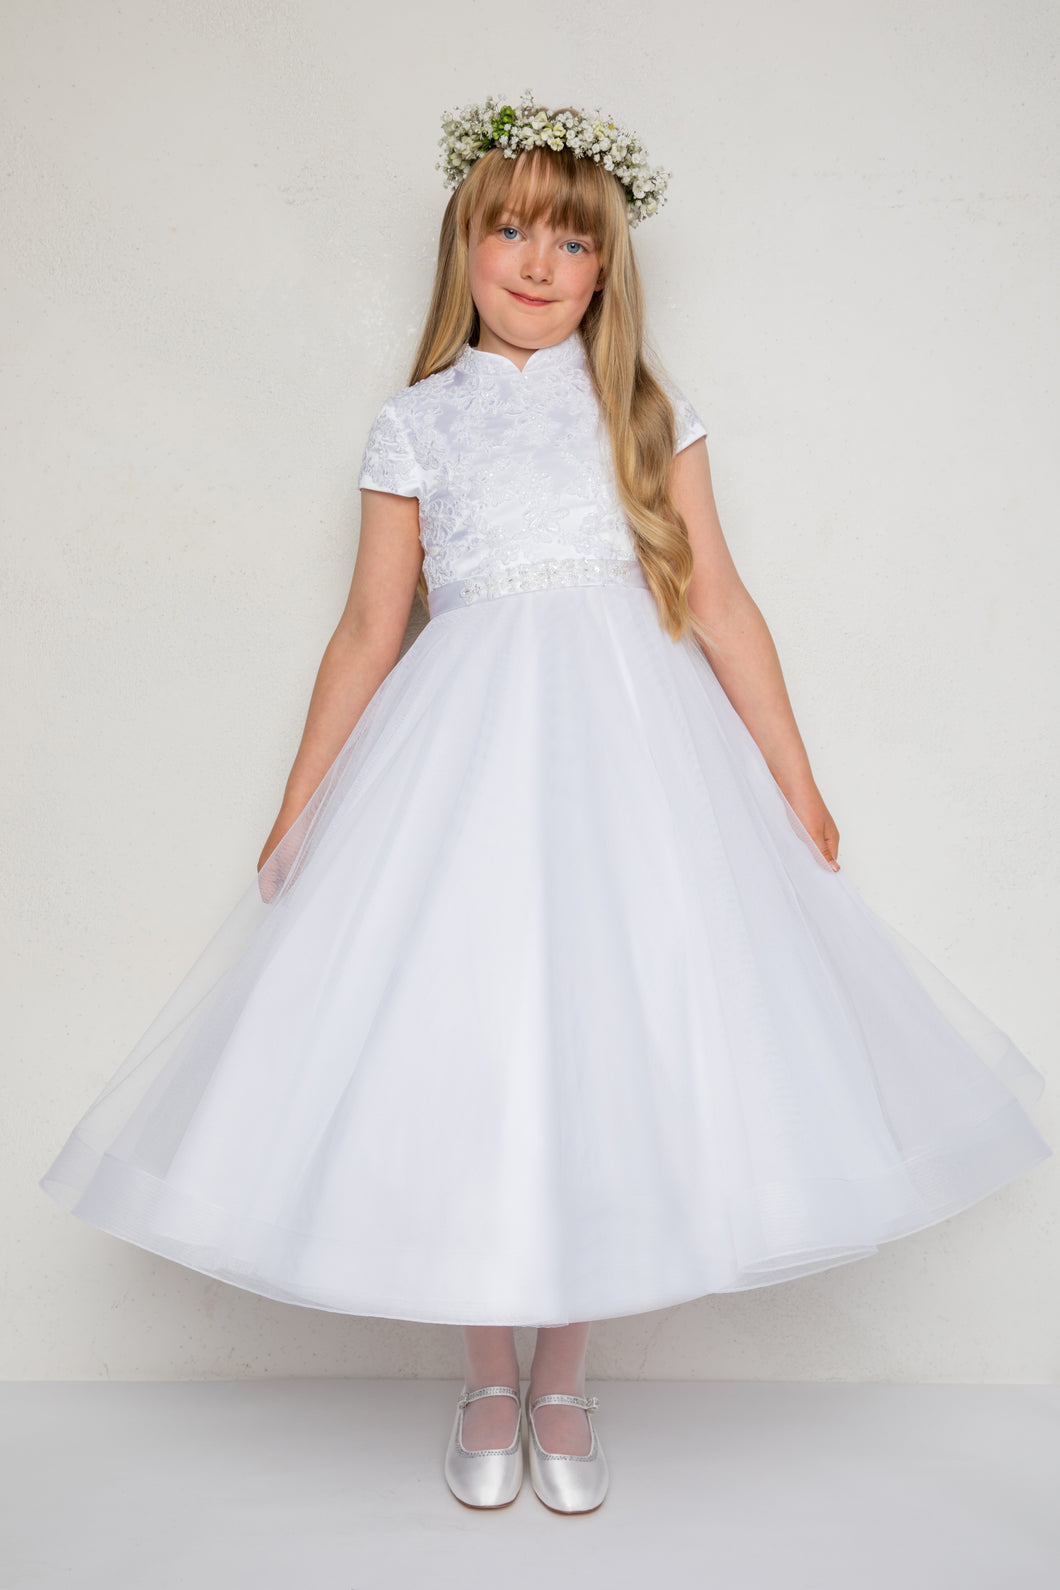 SALE COMMUNION DRESS Koko Girls White Communion Dress:- KO22365 Age 8